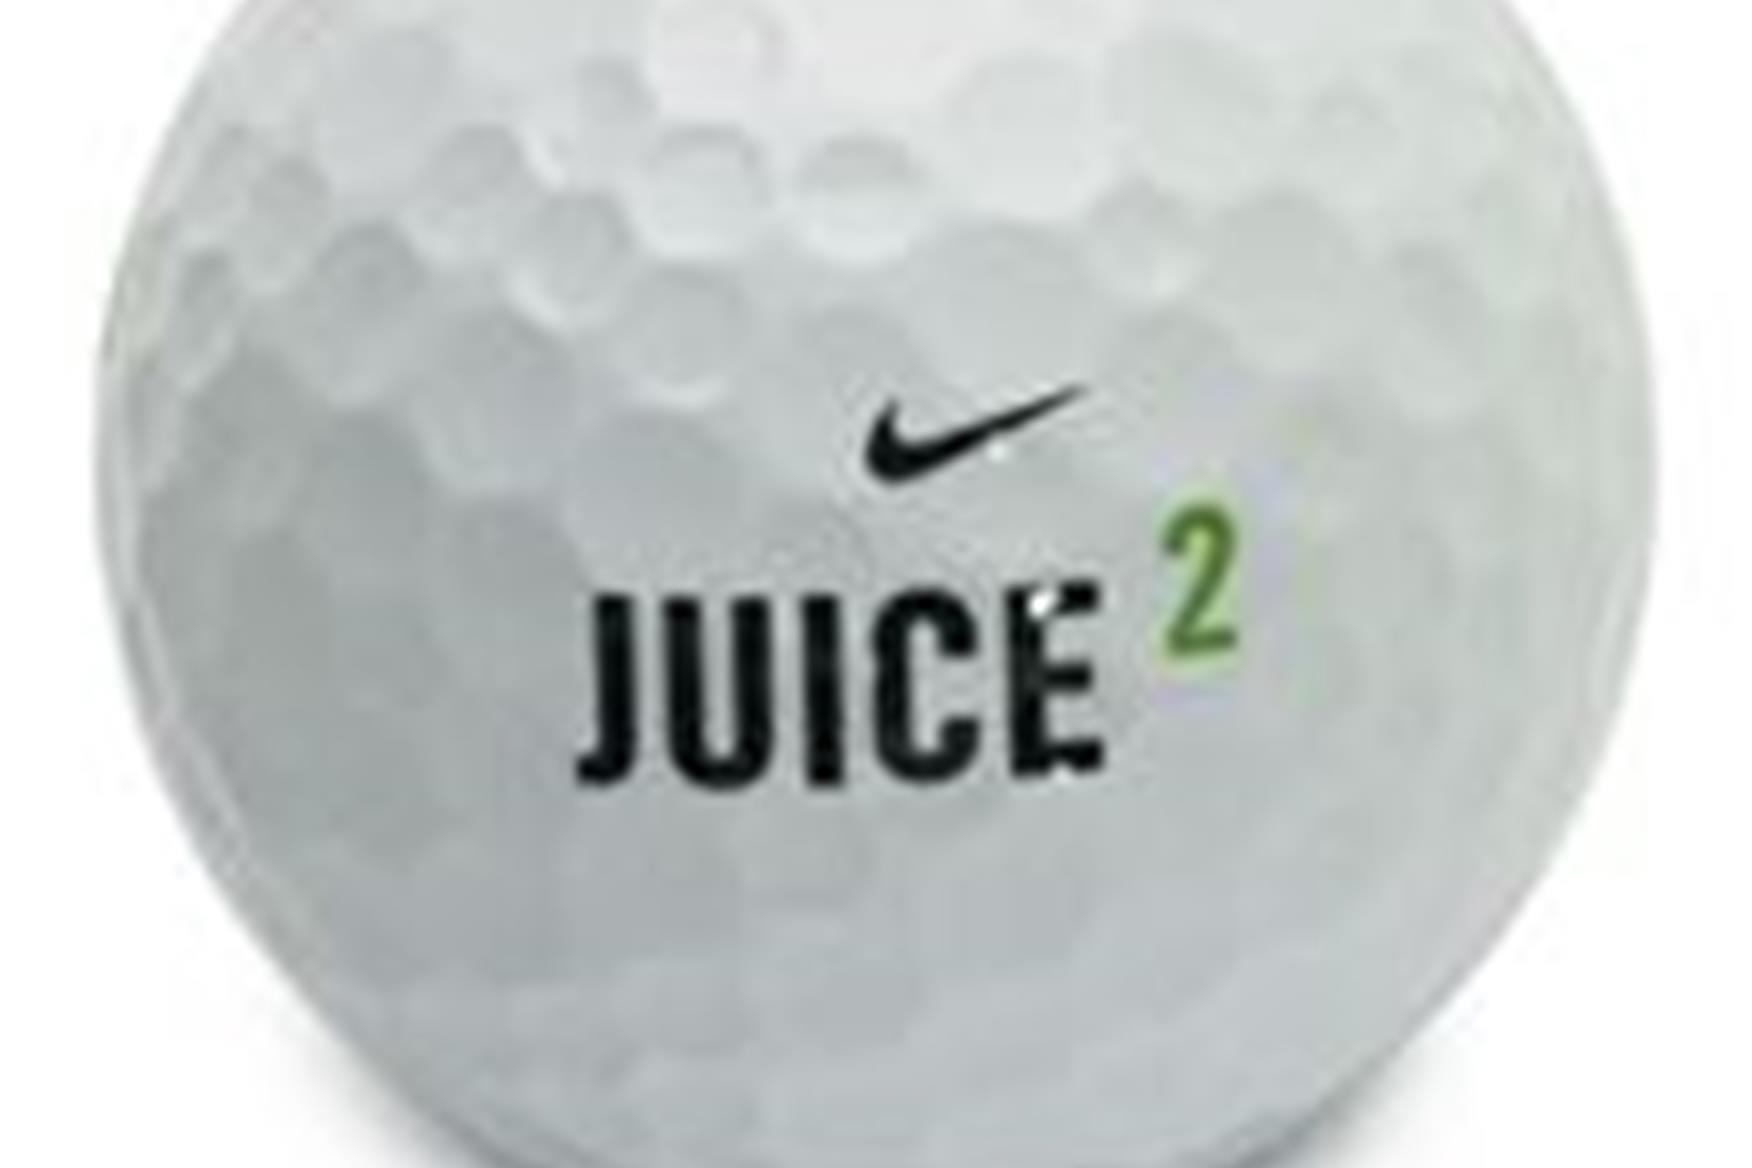 nike juice golf balls